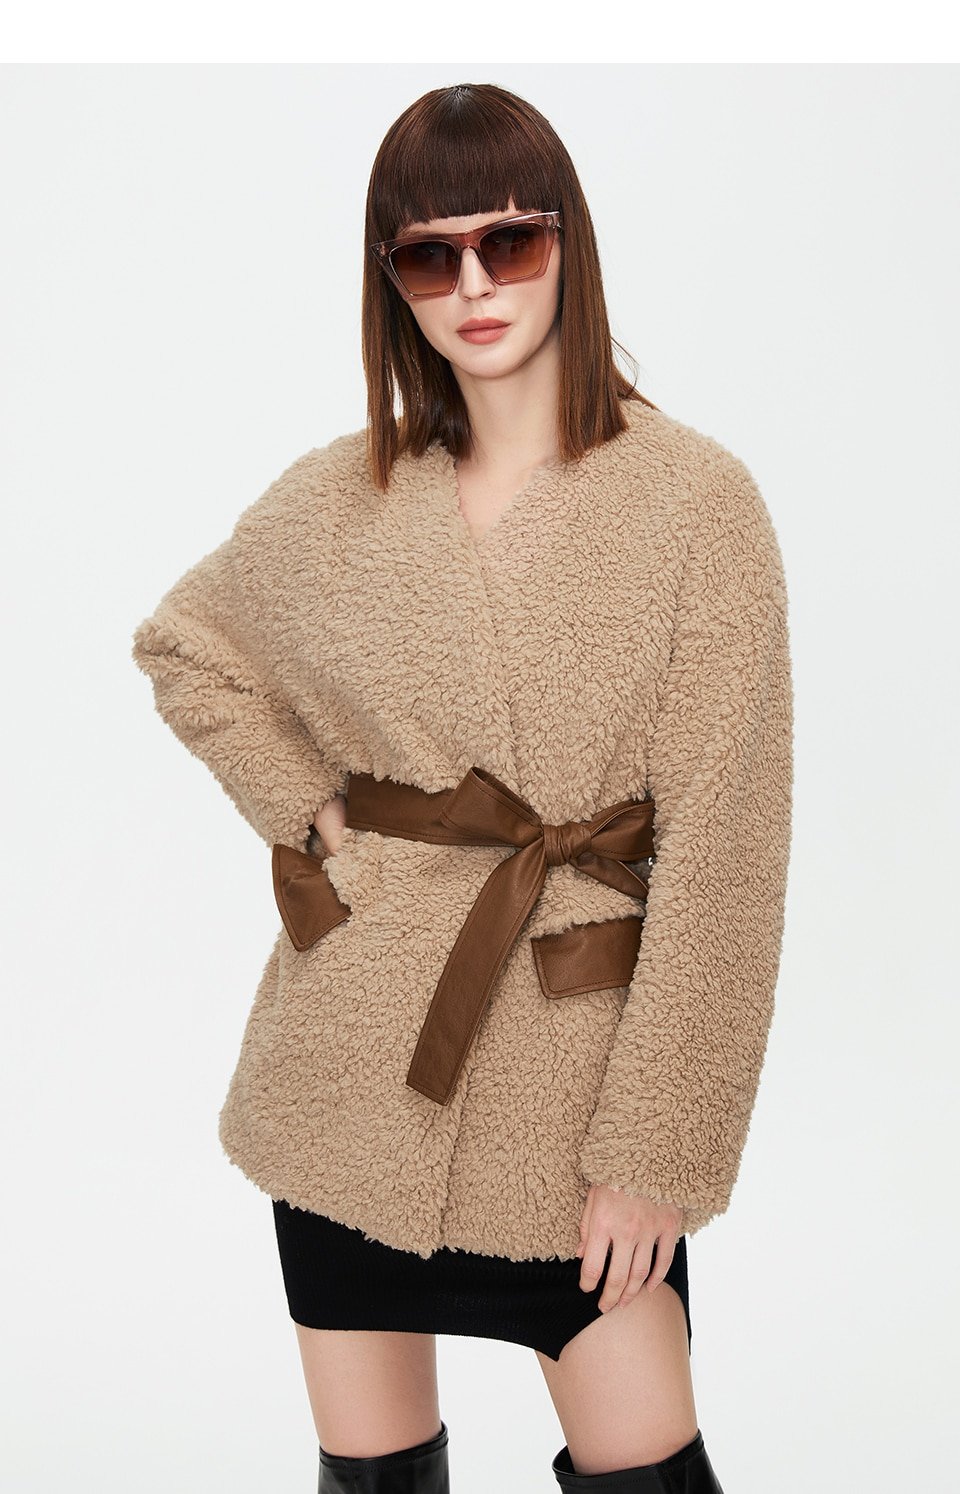 Astrid Teddy Coat Women Faux Fur Coats Long Sleeve Jackets Autumn Winter Loose tops Warm plus size Female Jacket Casual Parka